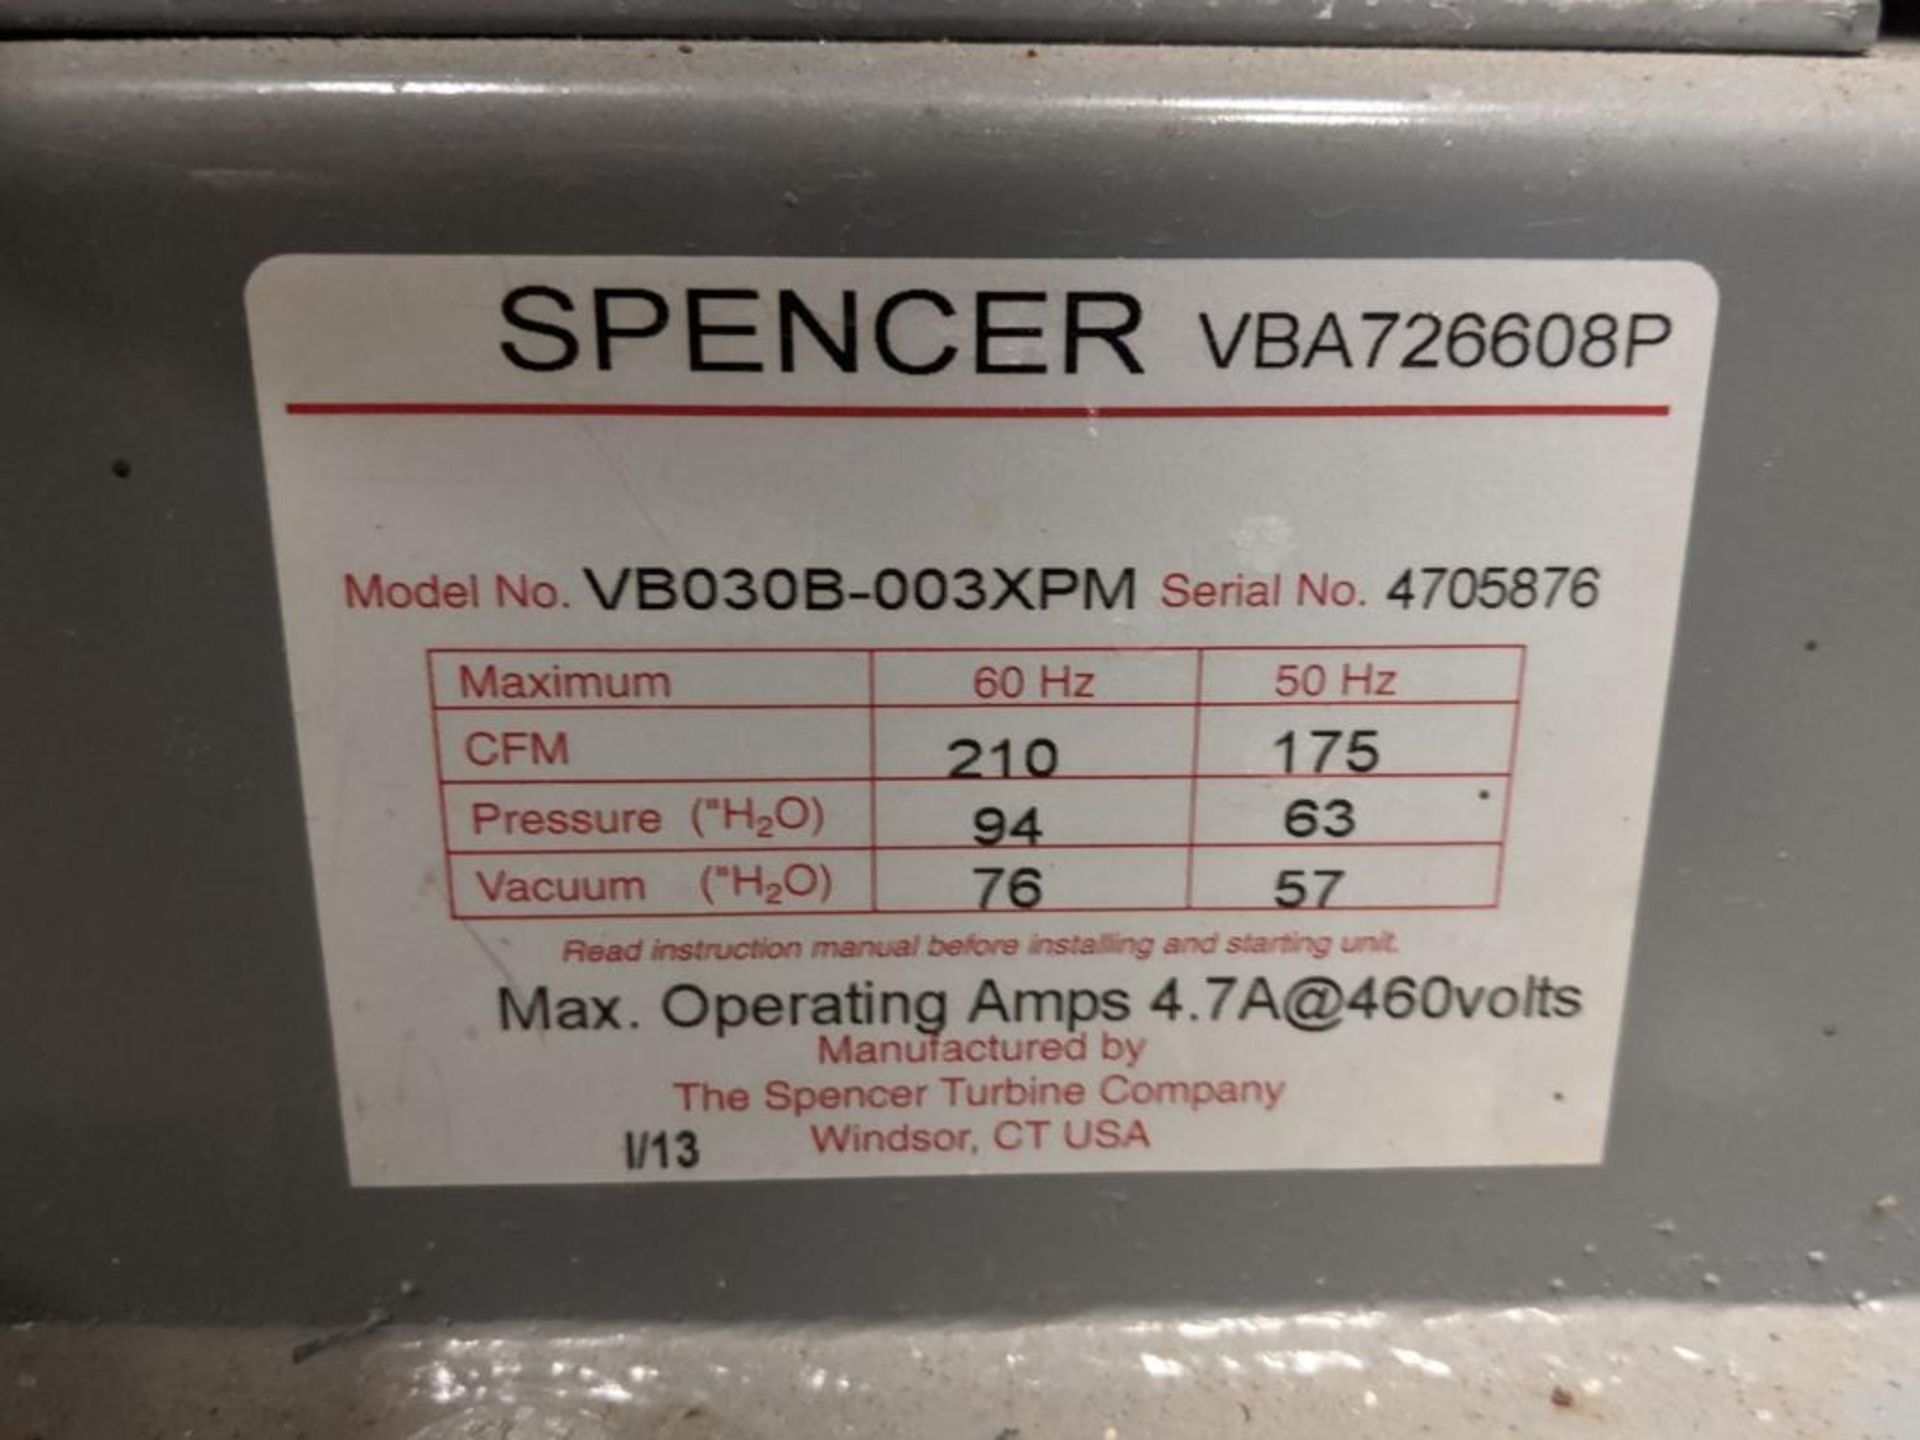 Spencer Model VBA726608P 4 HP Vortex Blower - Image 3 of 3